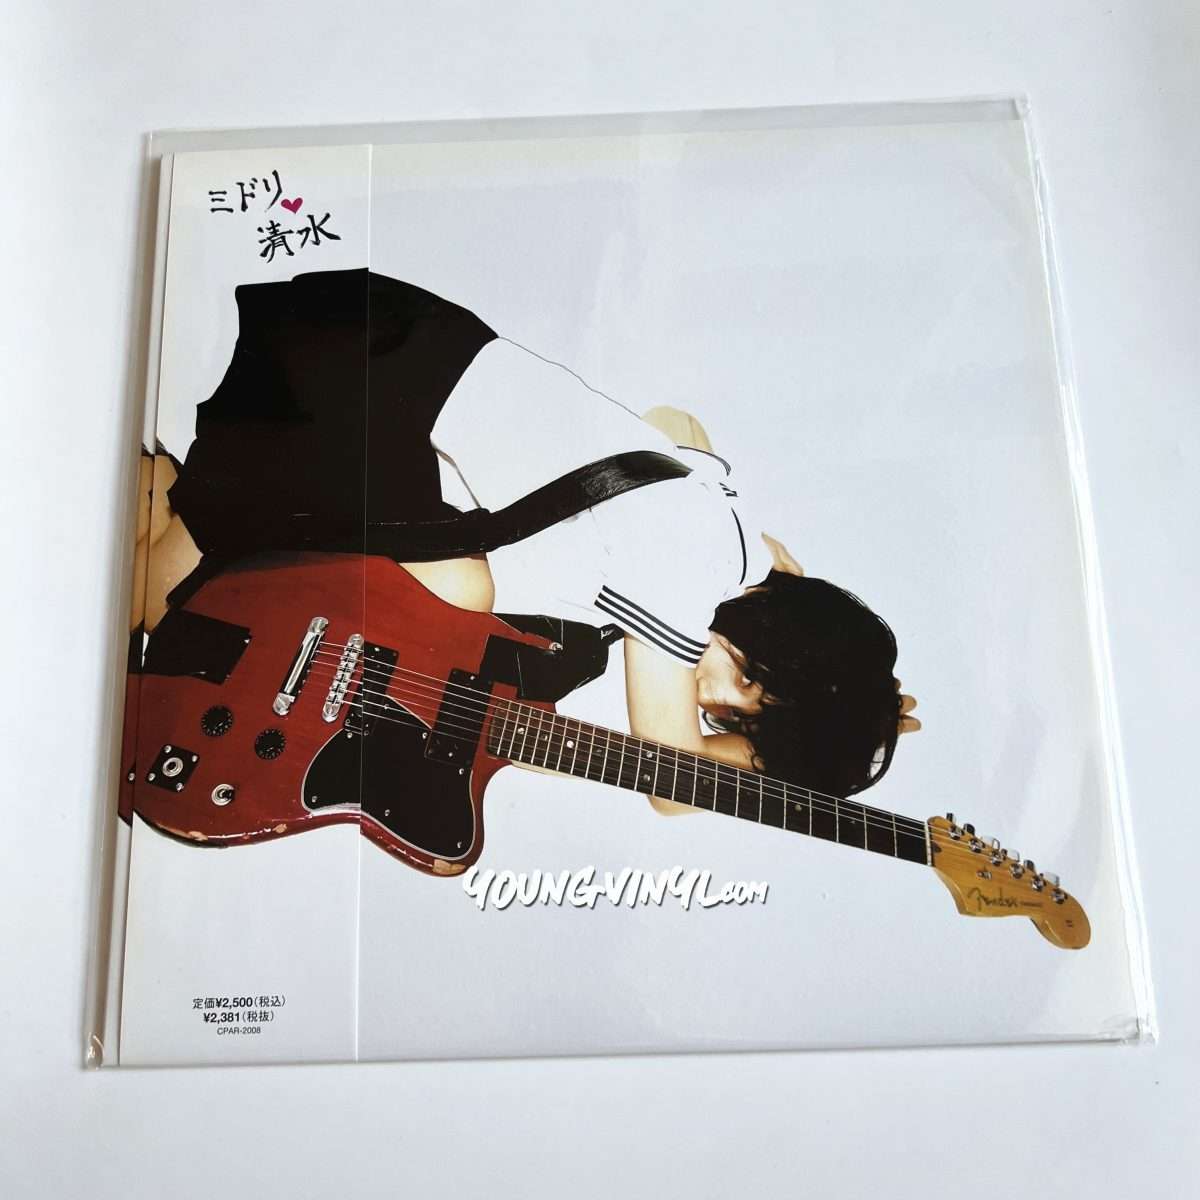 Midori ミドリ 清水 Limited Vinyl - Young Vinyl